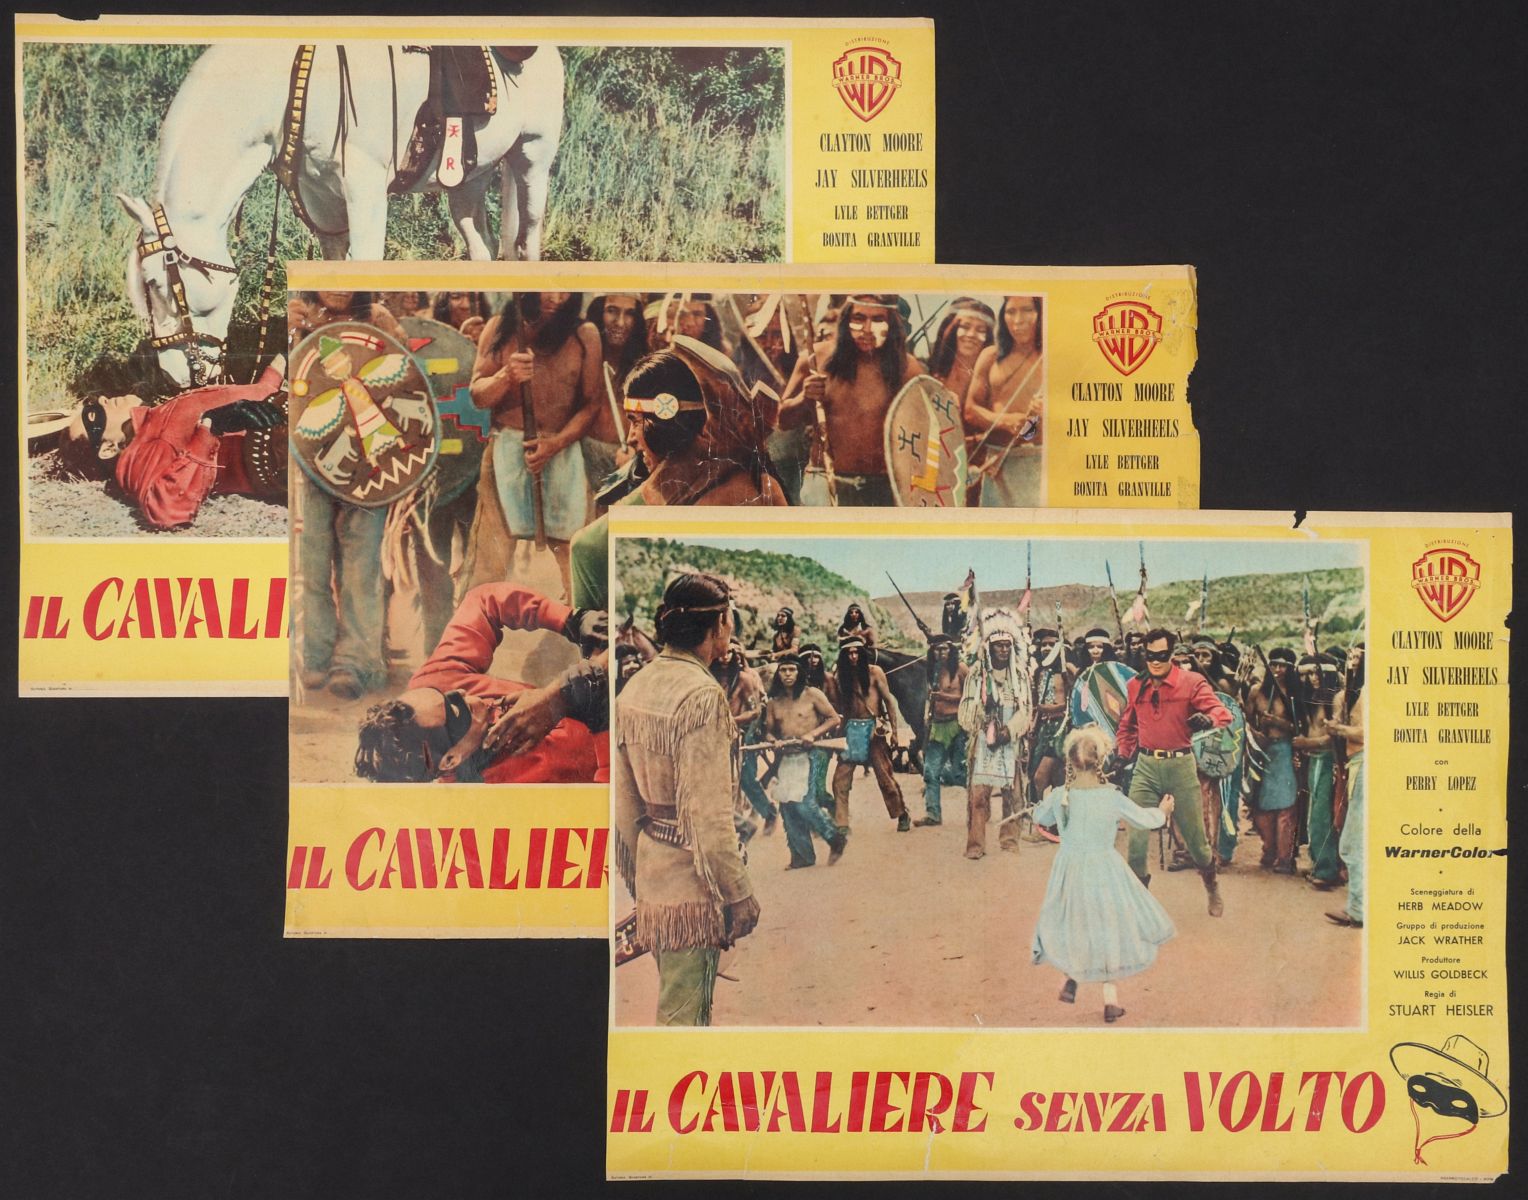 LONE RANGER ITALIAN CINEMA LOBBY CARDS AND POSTER